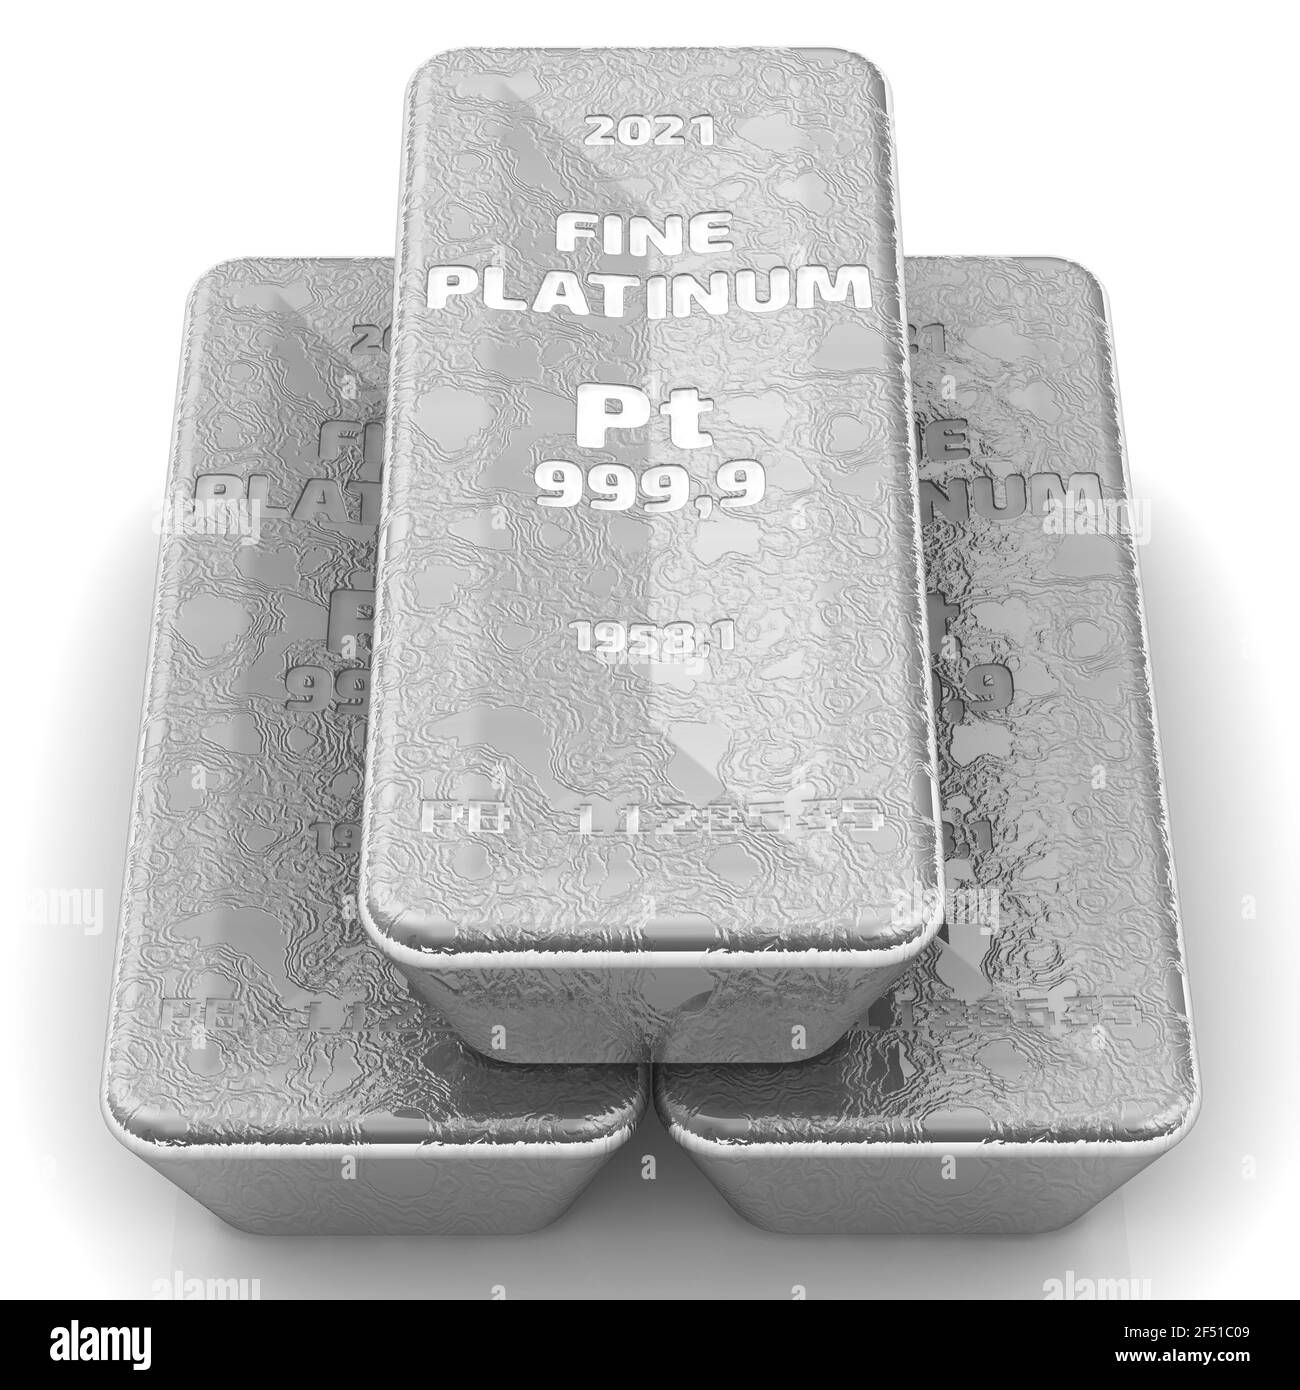 The highest standard platinum bars. Three ingots of 999.9 Fine Platinum lie on white surface. 3D illustration Stock Photo